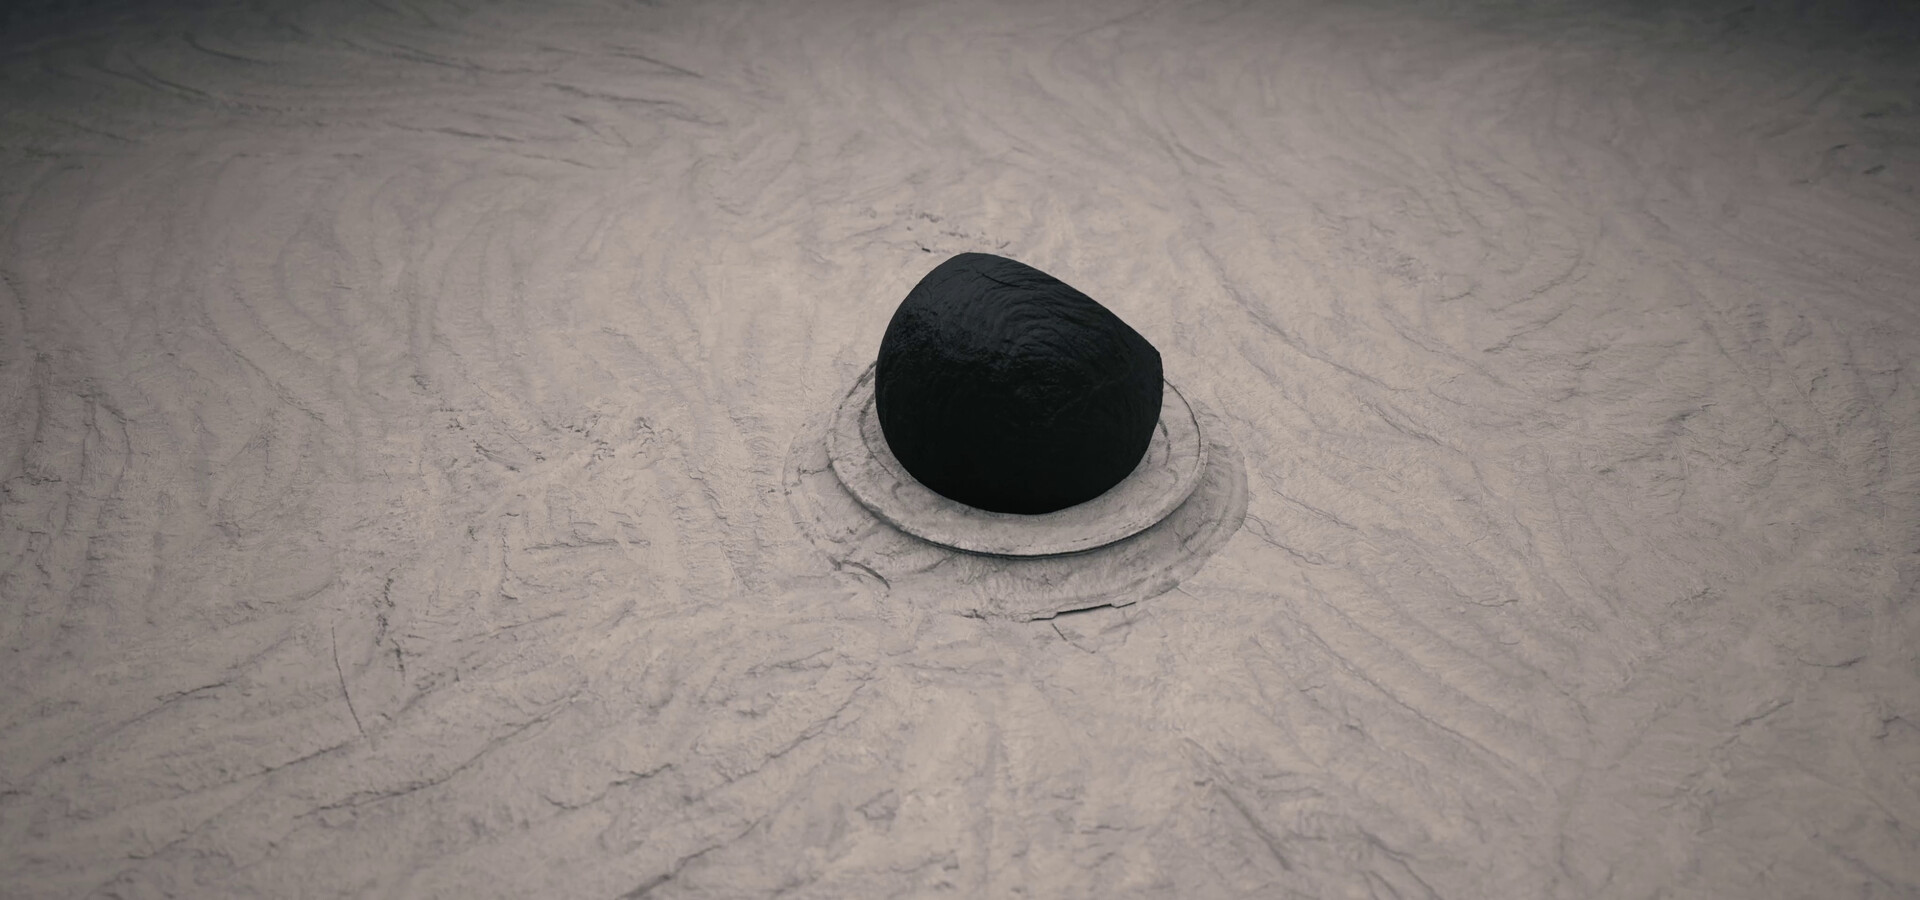 How The Desert In 'Holes' Symbolizes Purgatory